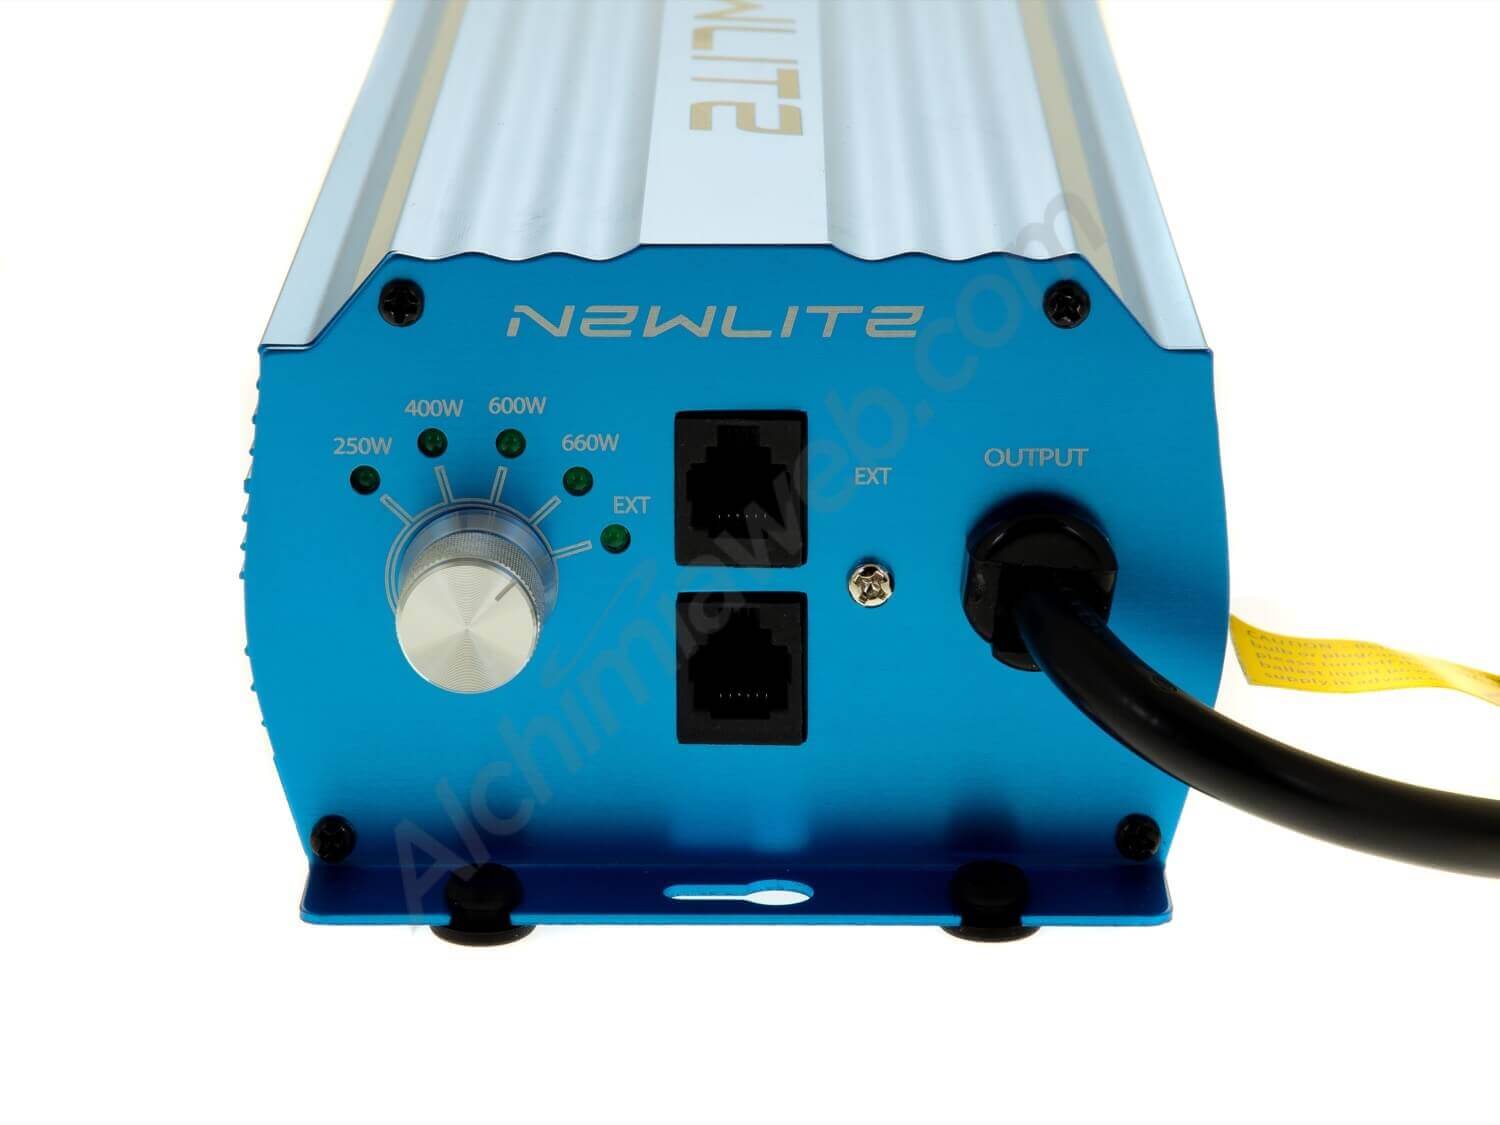 Balastro Digital Newlite e-blue 600W con potenciómetro